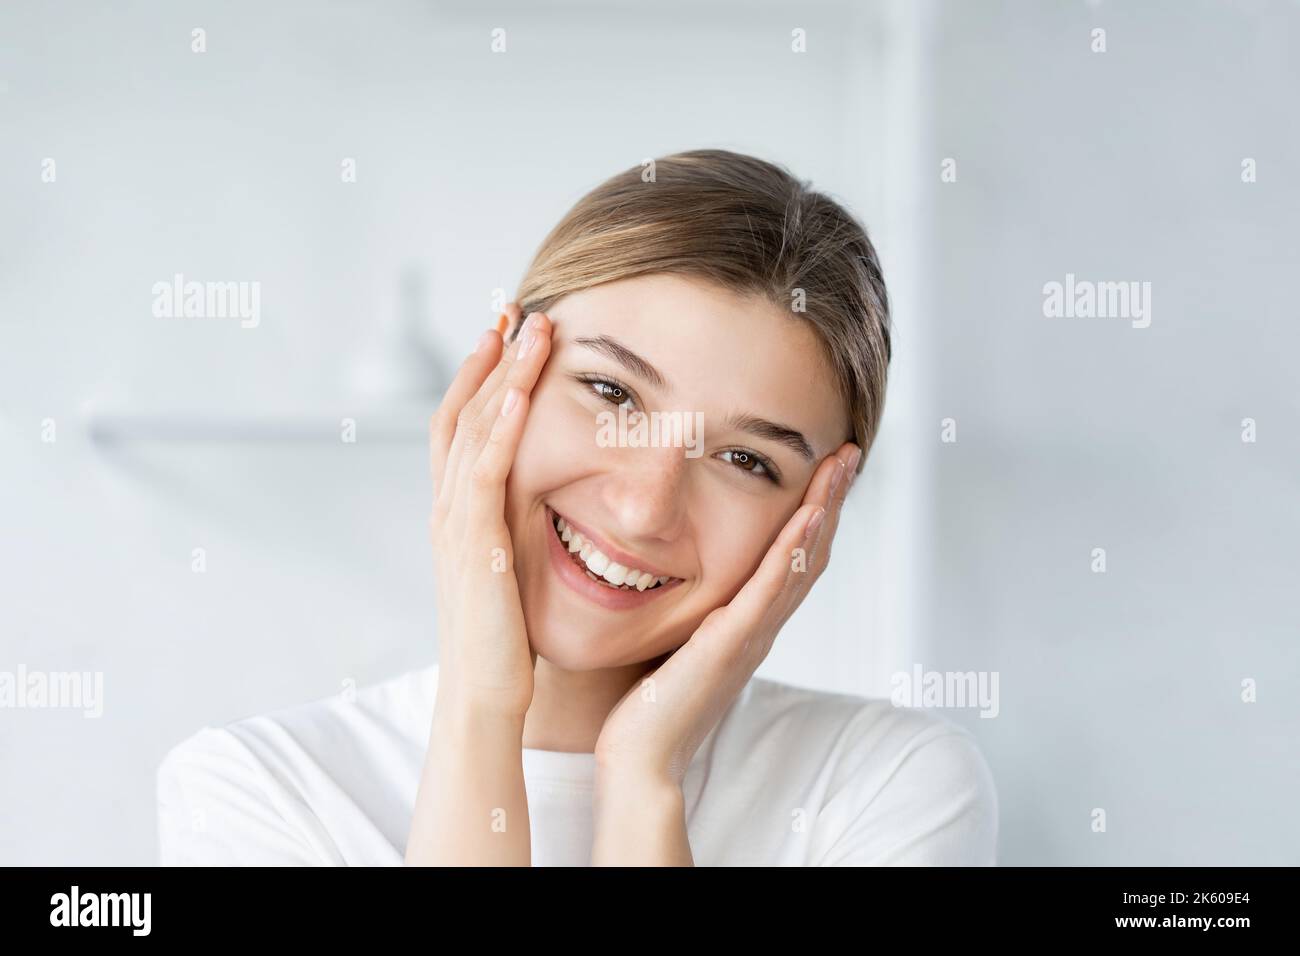 home skincare facial treatment smiling woman face Stock Photo